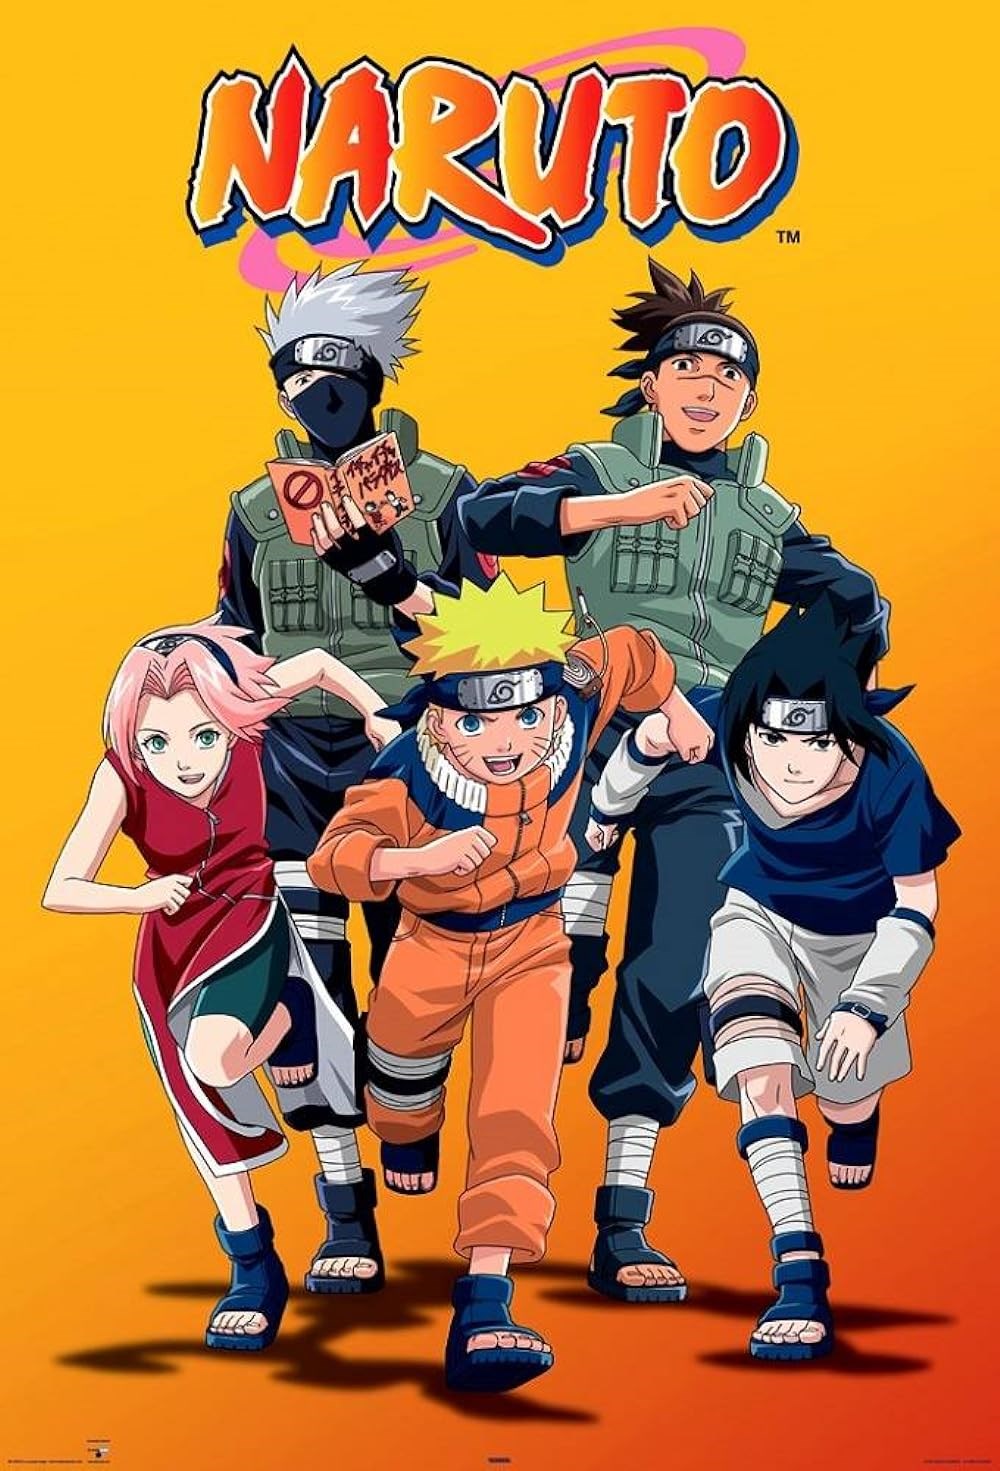 en çok izlenen anime dizisi Naruto